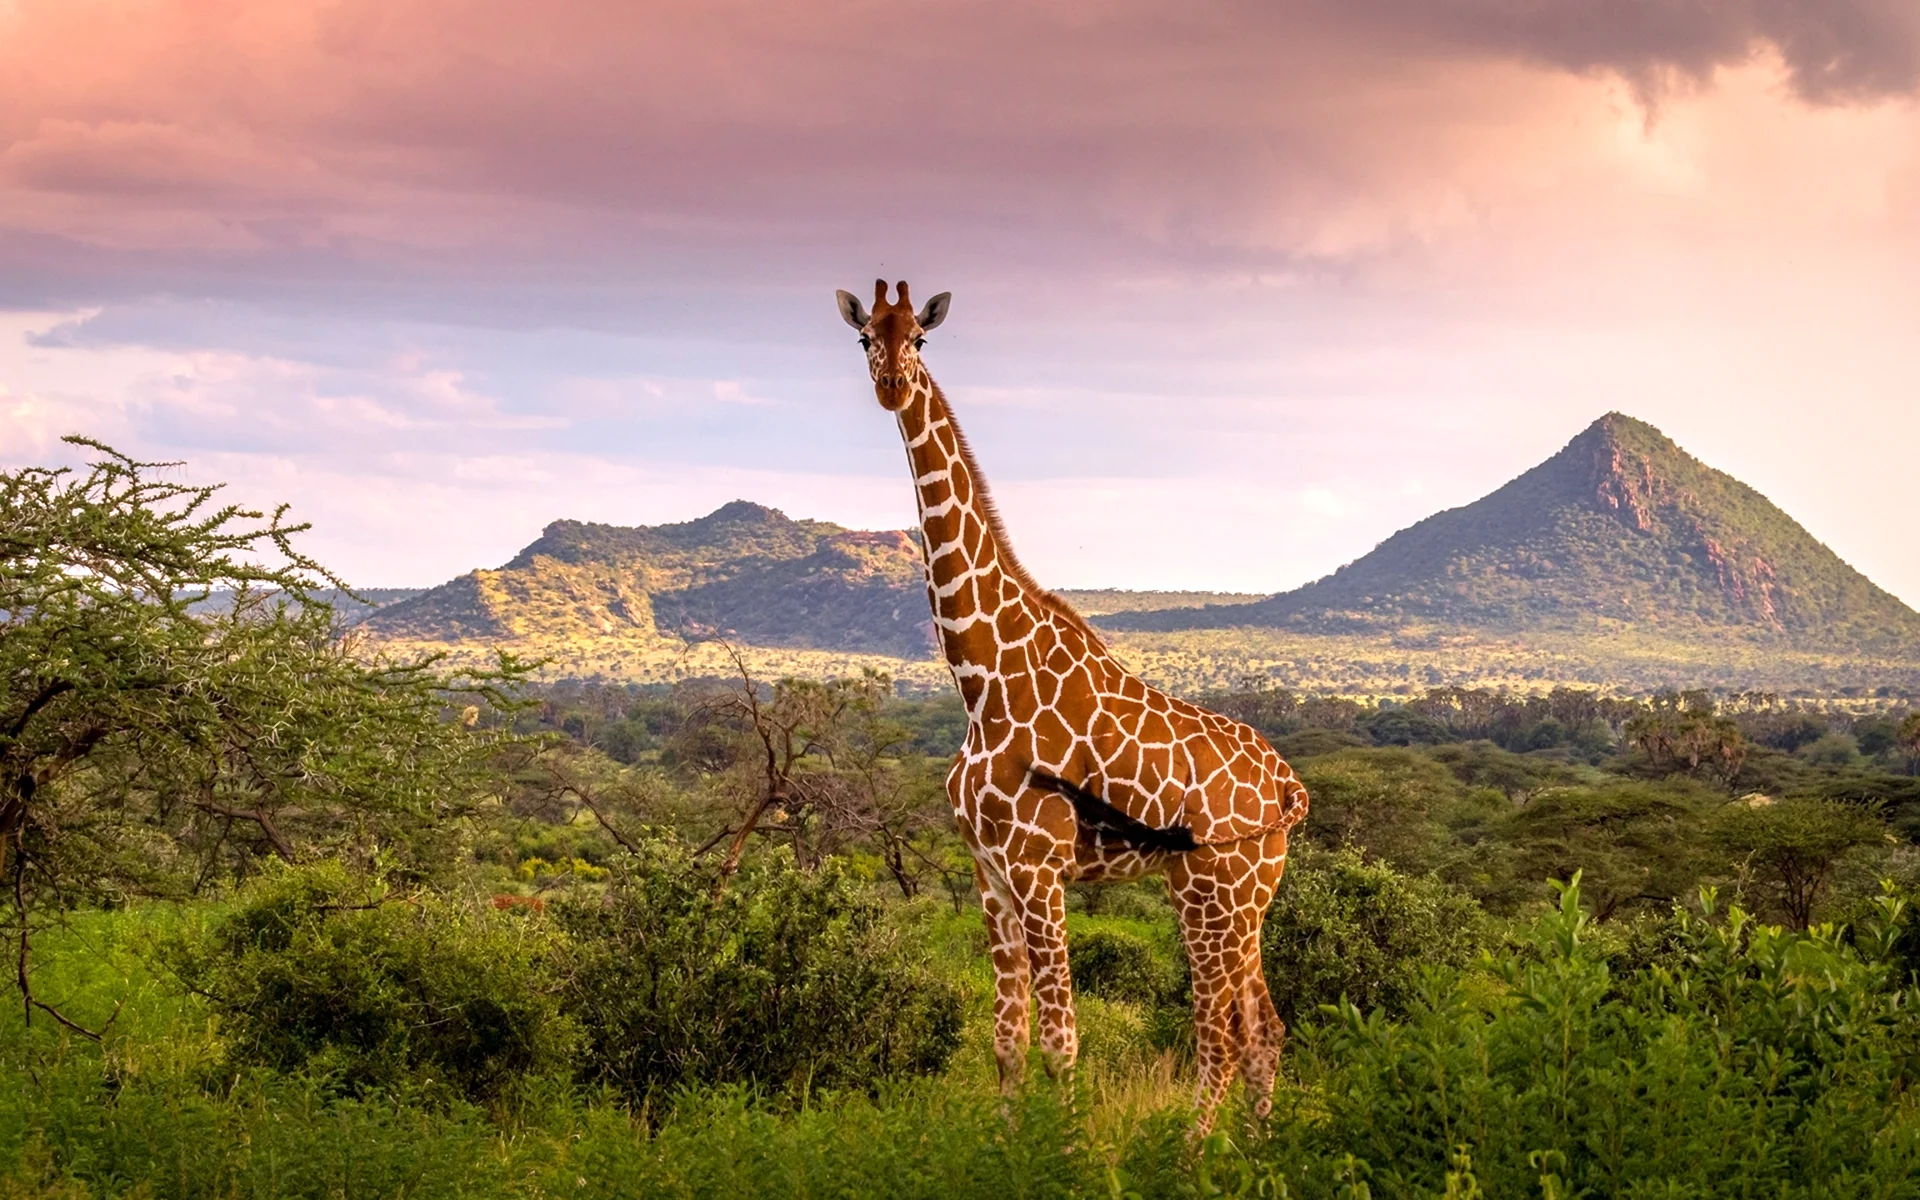 Жираф в Африке